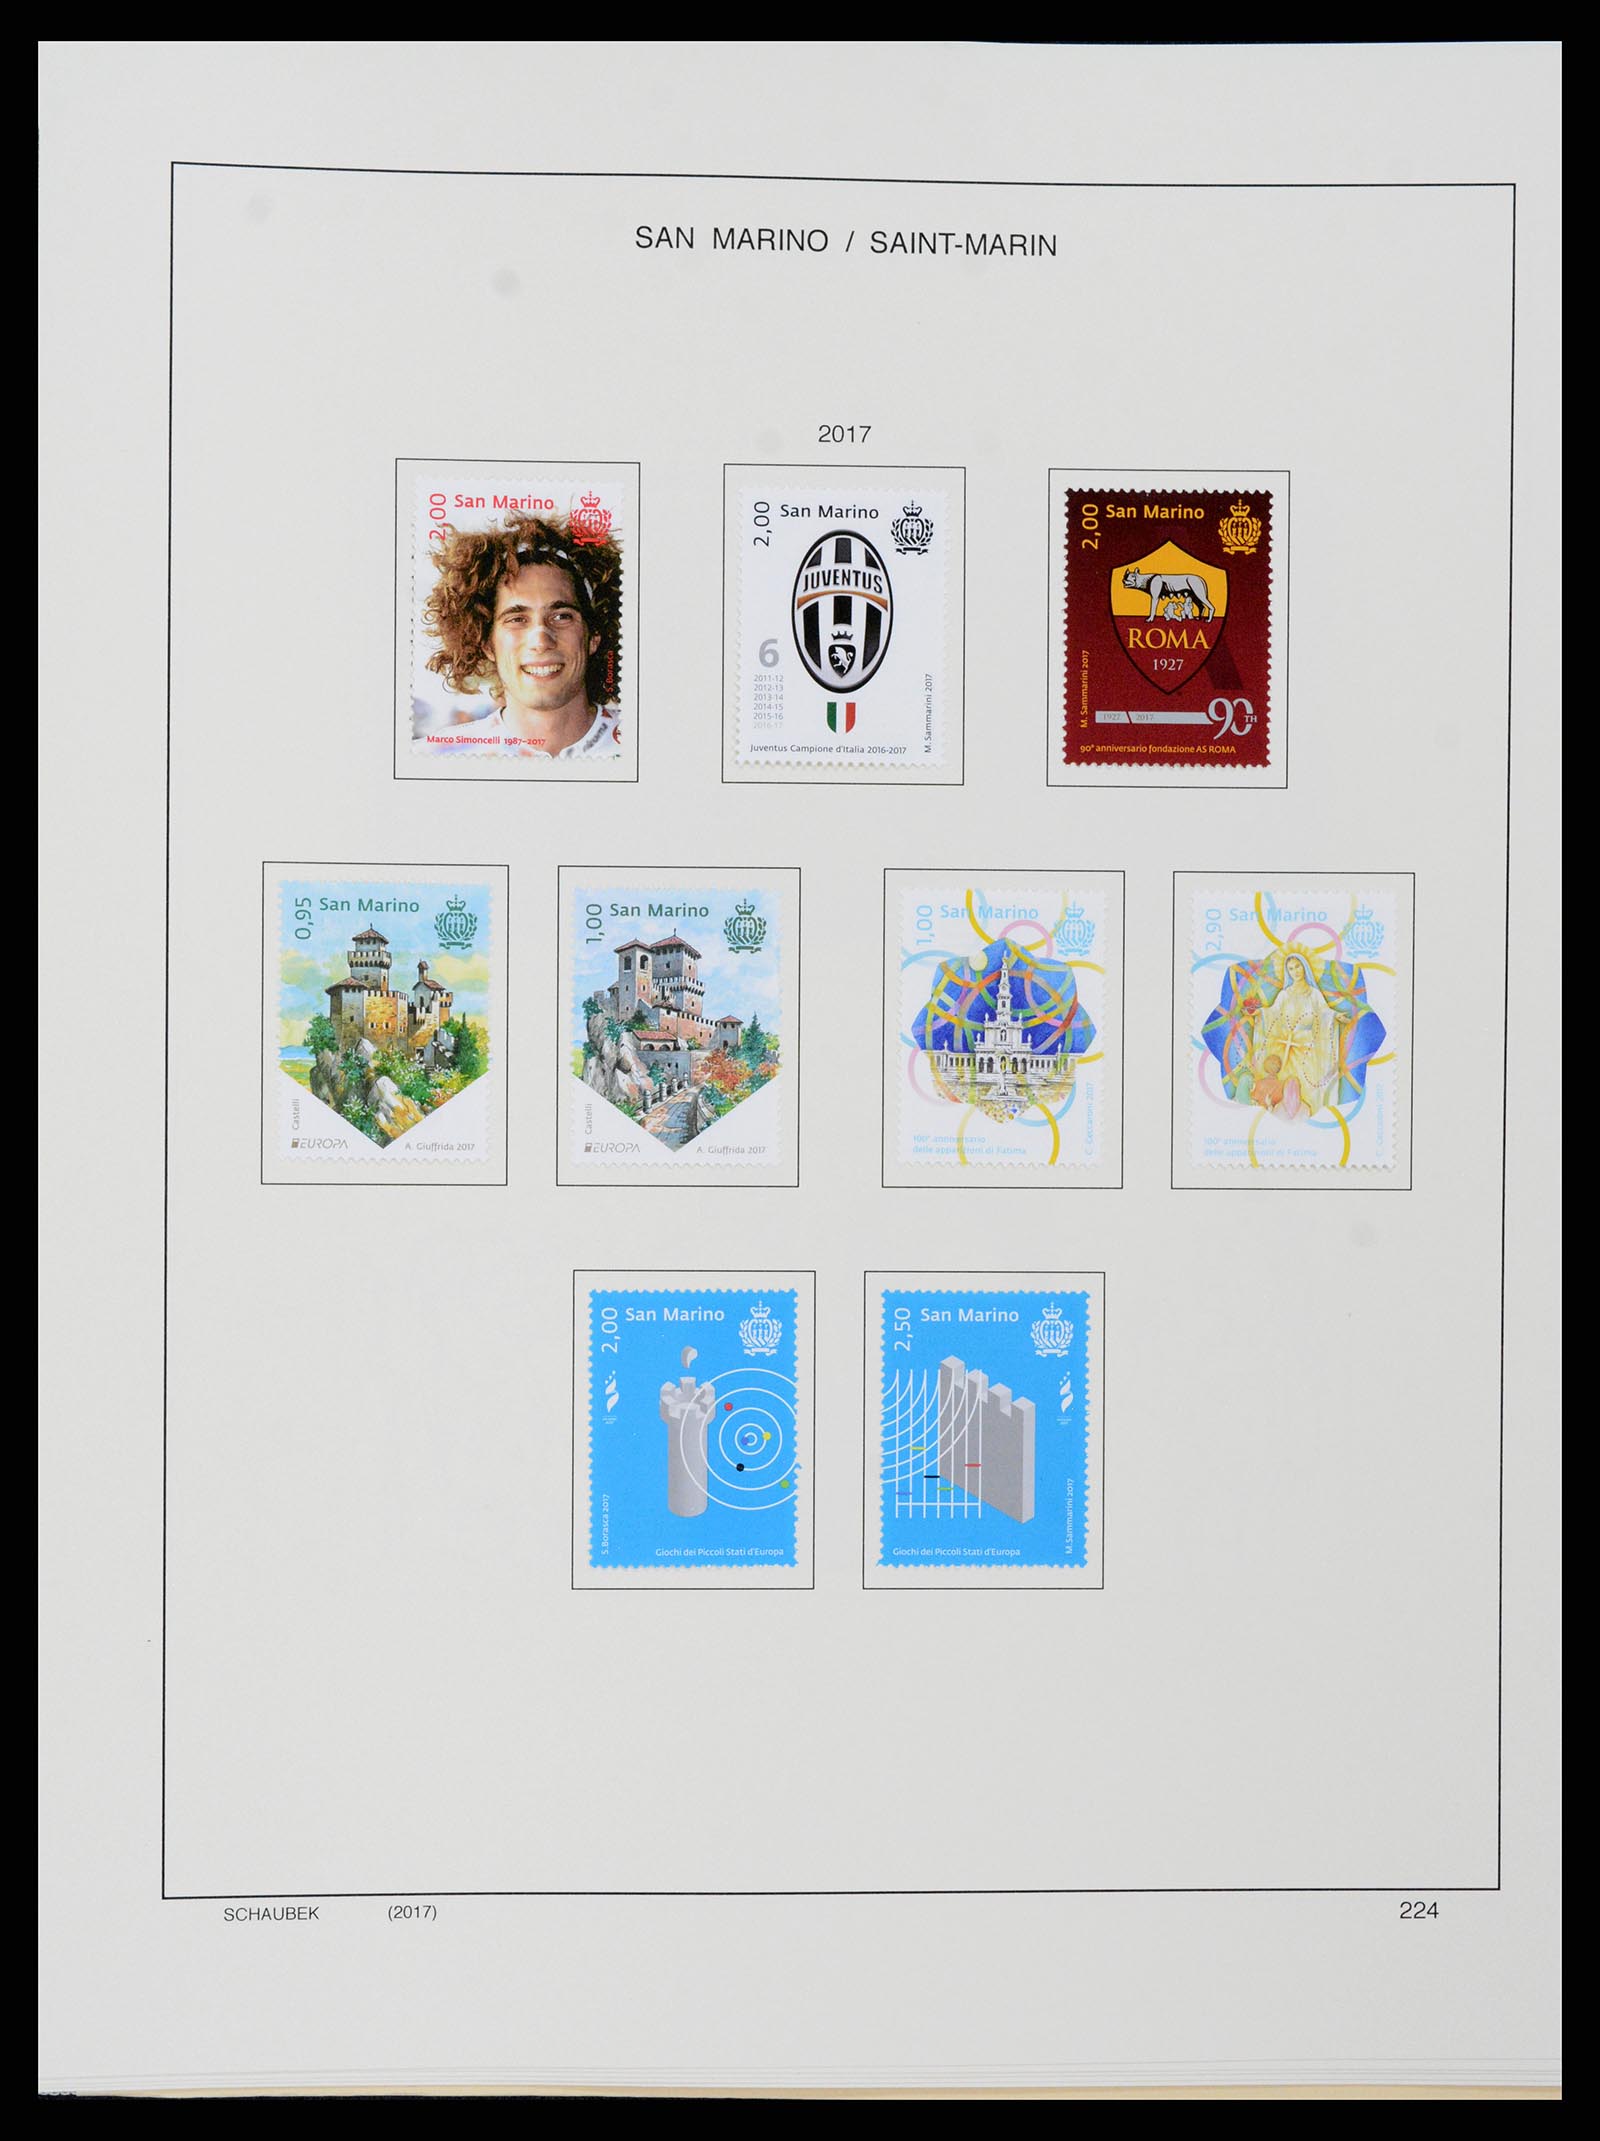 37556 295 - Stamp collection 37556 San Marino 1877-2017.